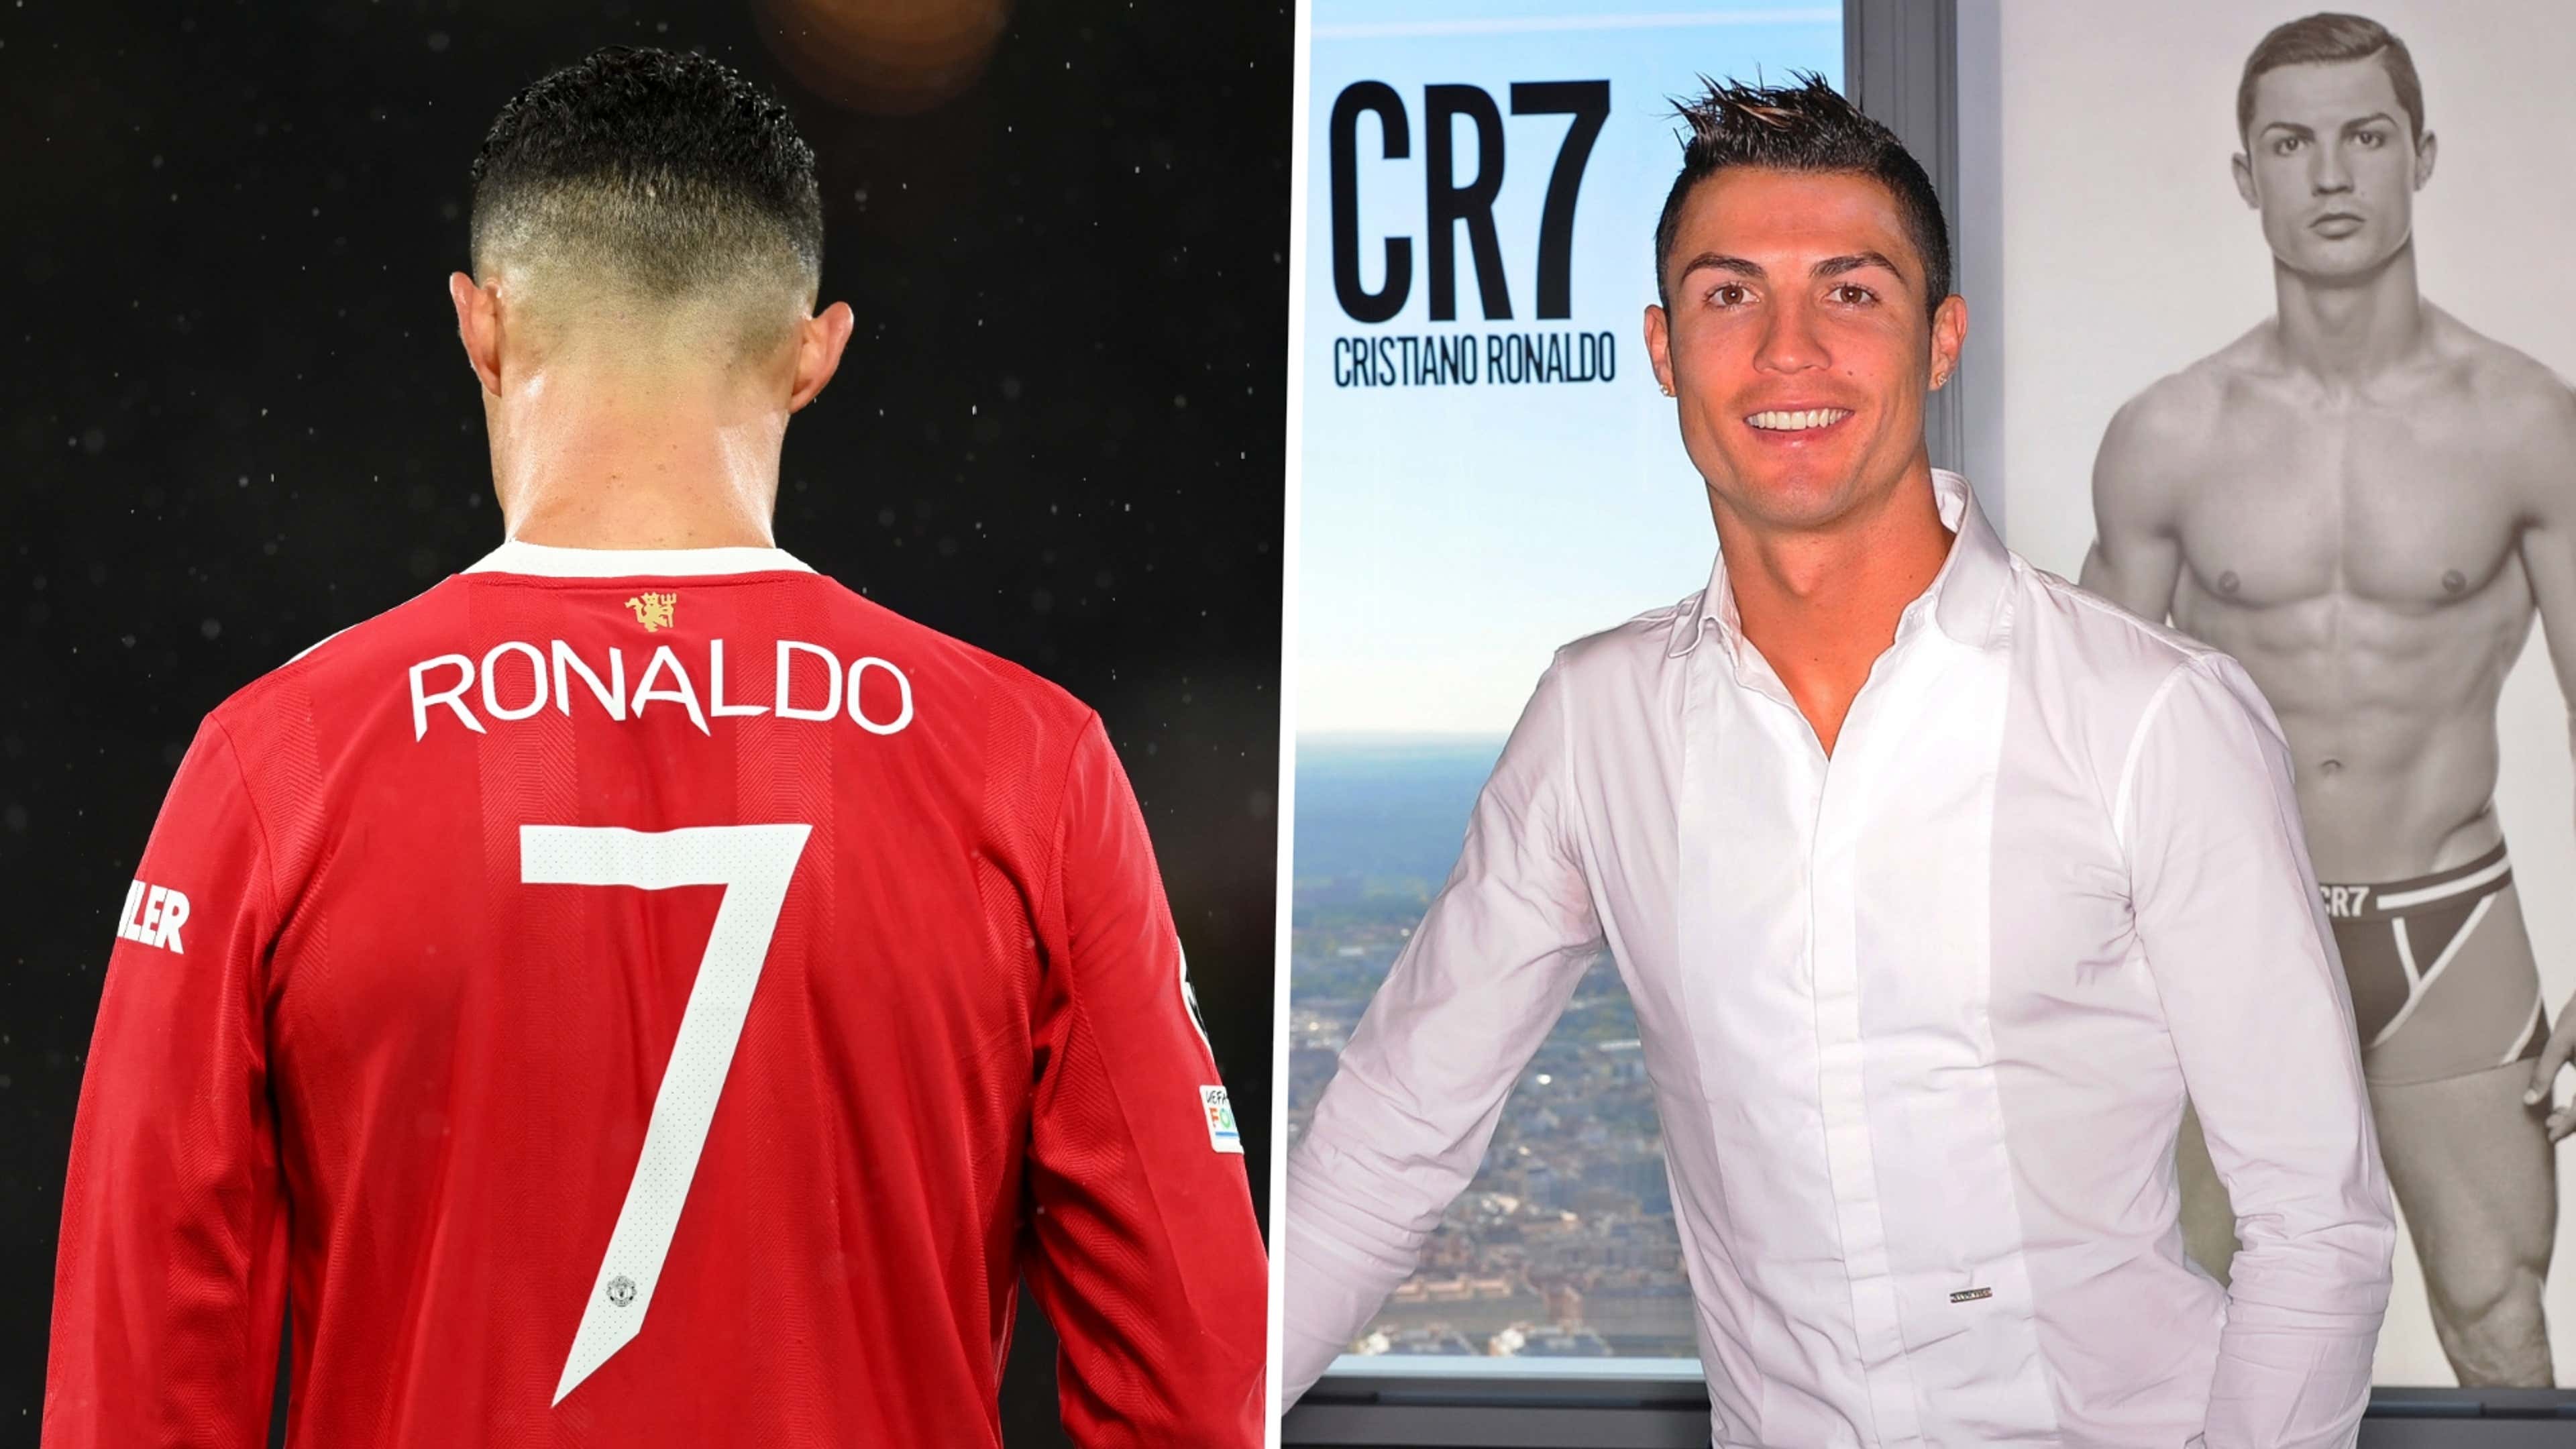 Cristiano Ronaldo added a new photo. - Cristiano Ronaldo